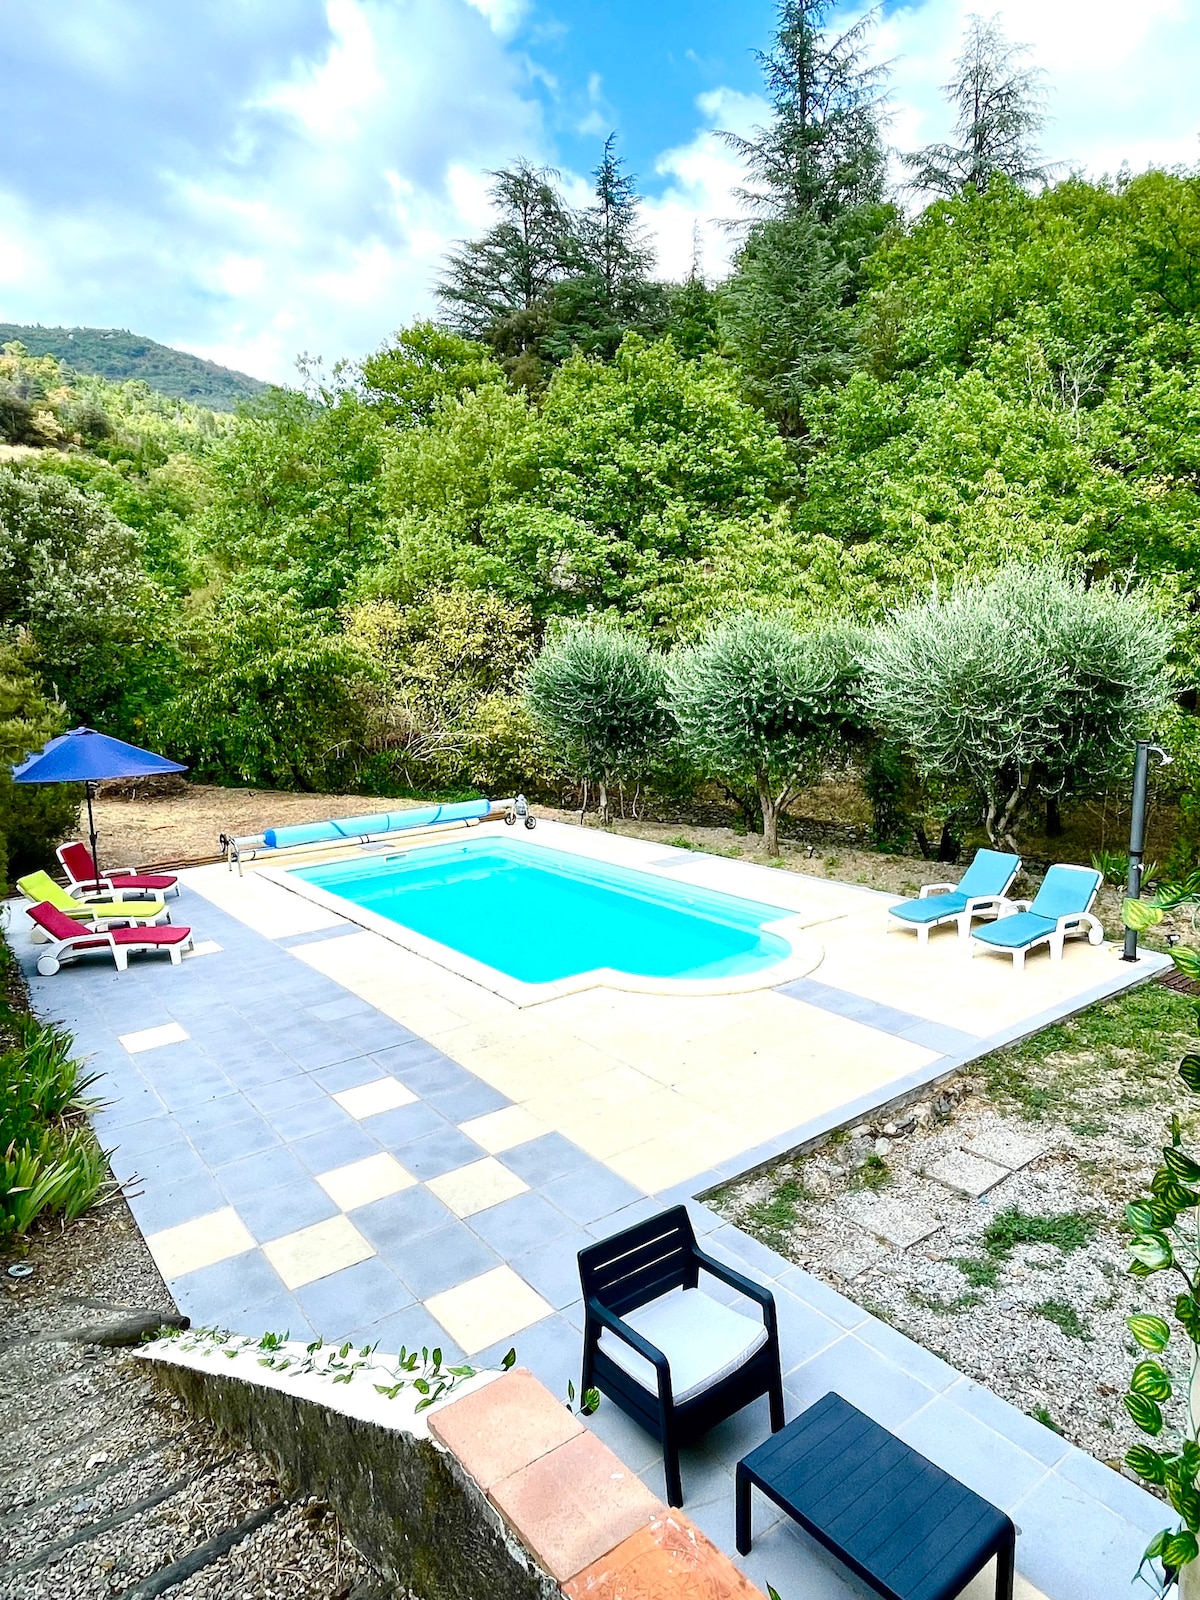 Maison privée piscine chauffée jardin au calme